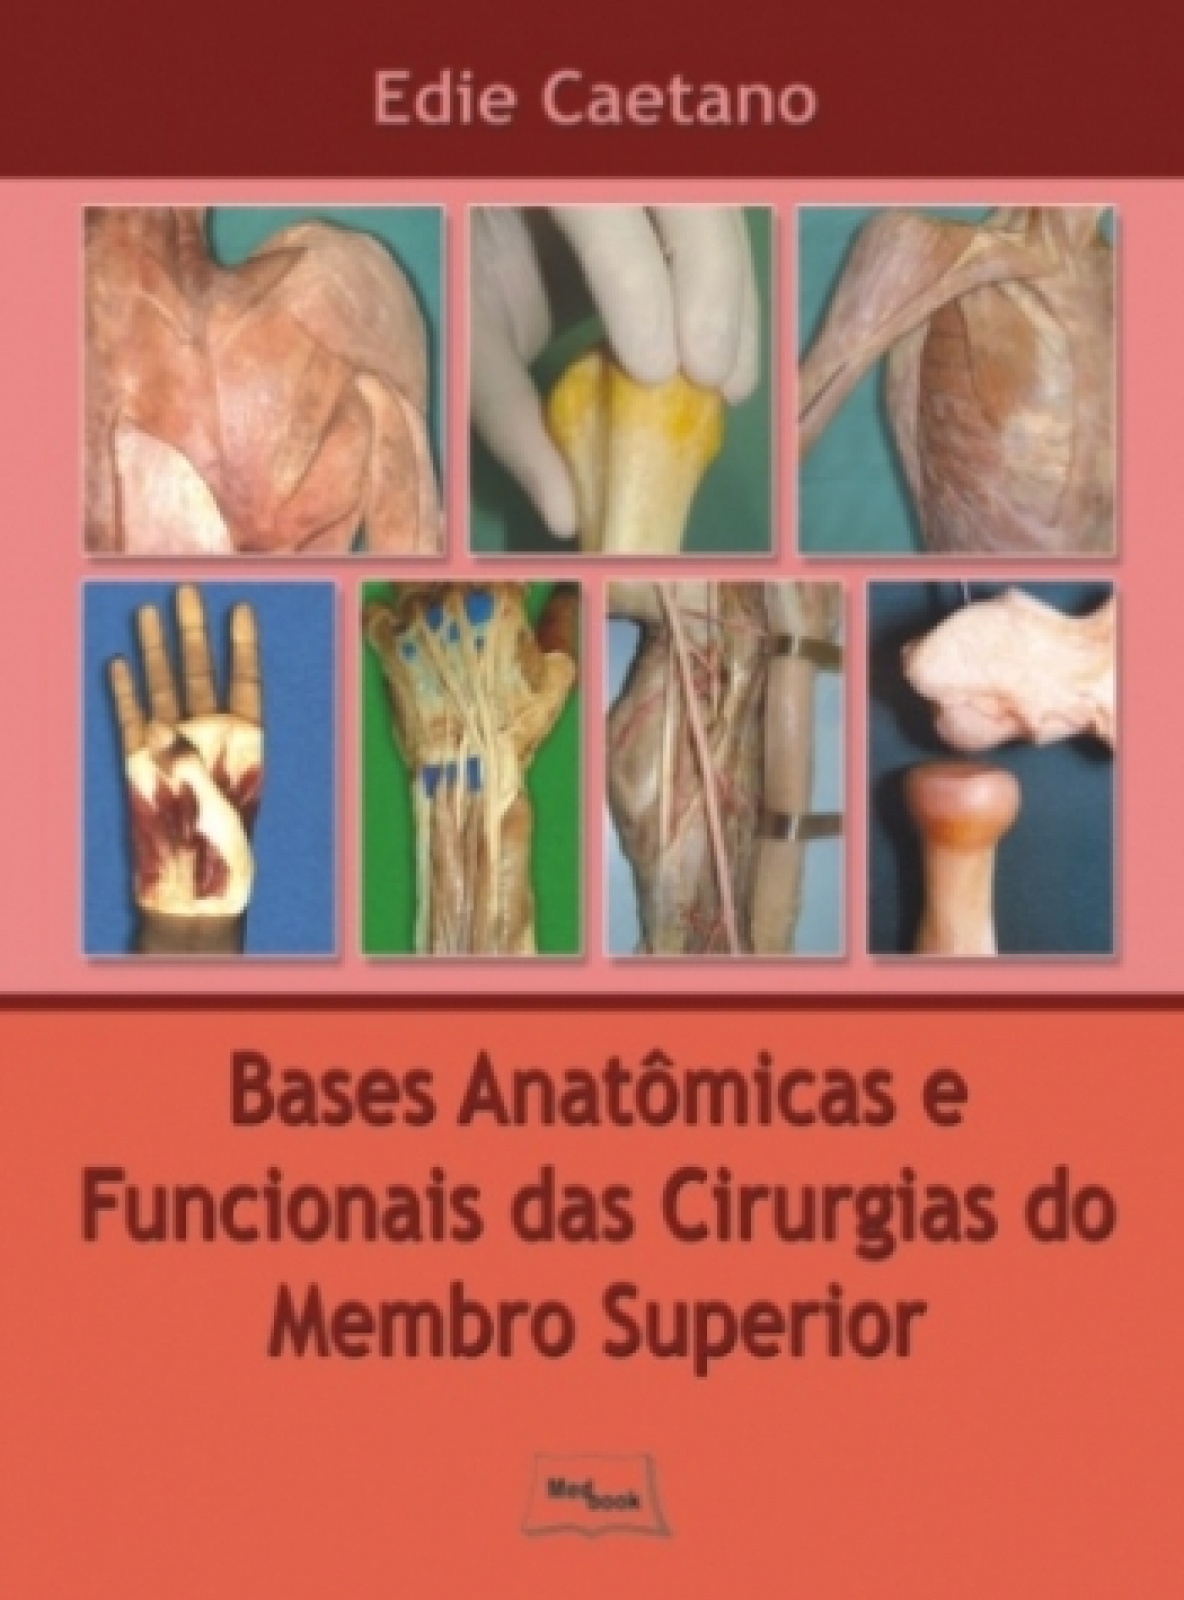 Bases Anatômicas E Funcionais Das Cirurgias Do Membro Superior